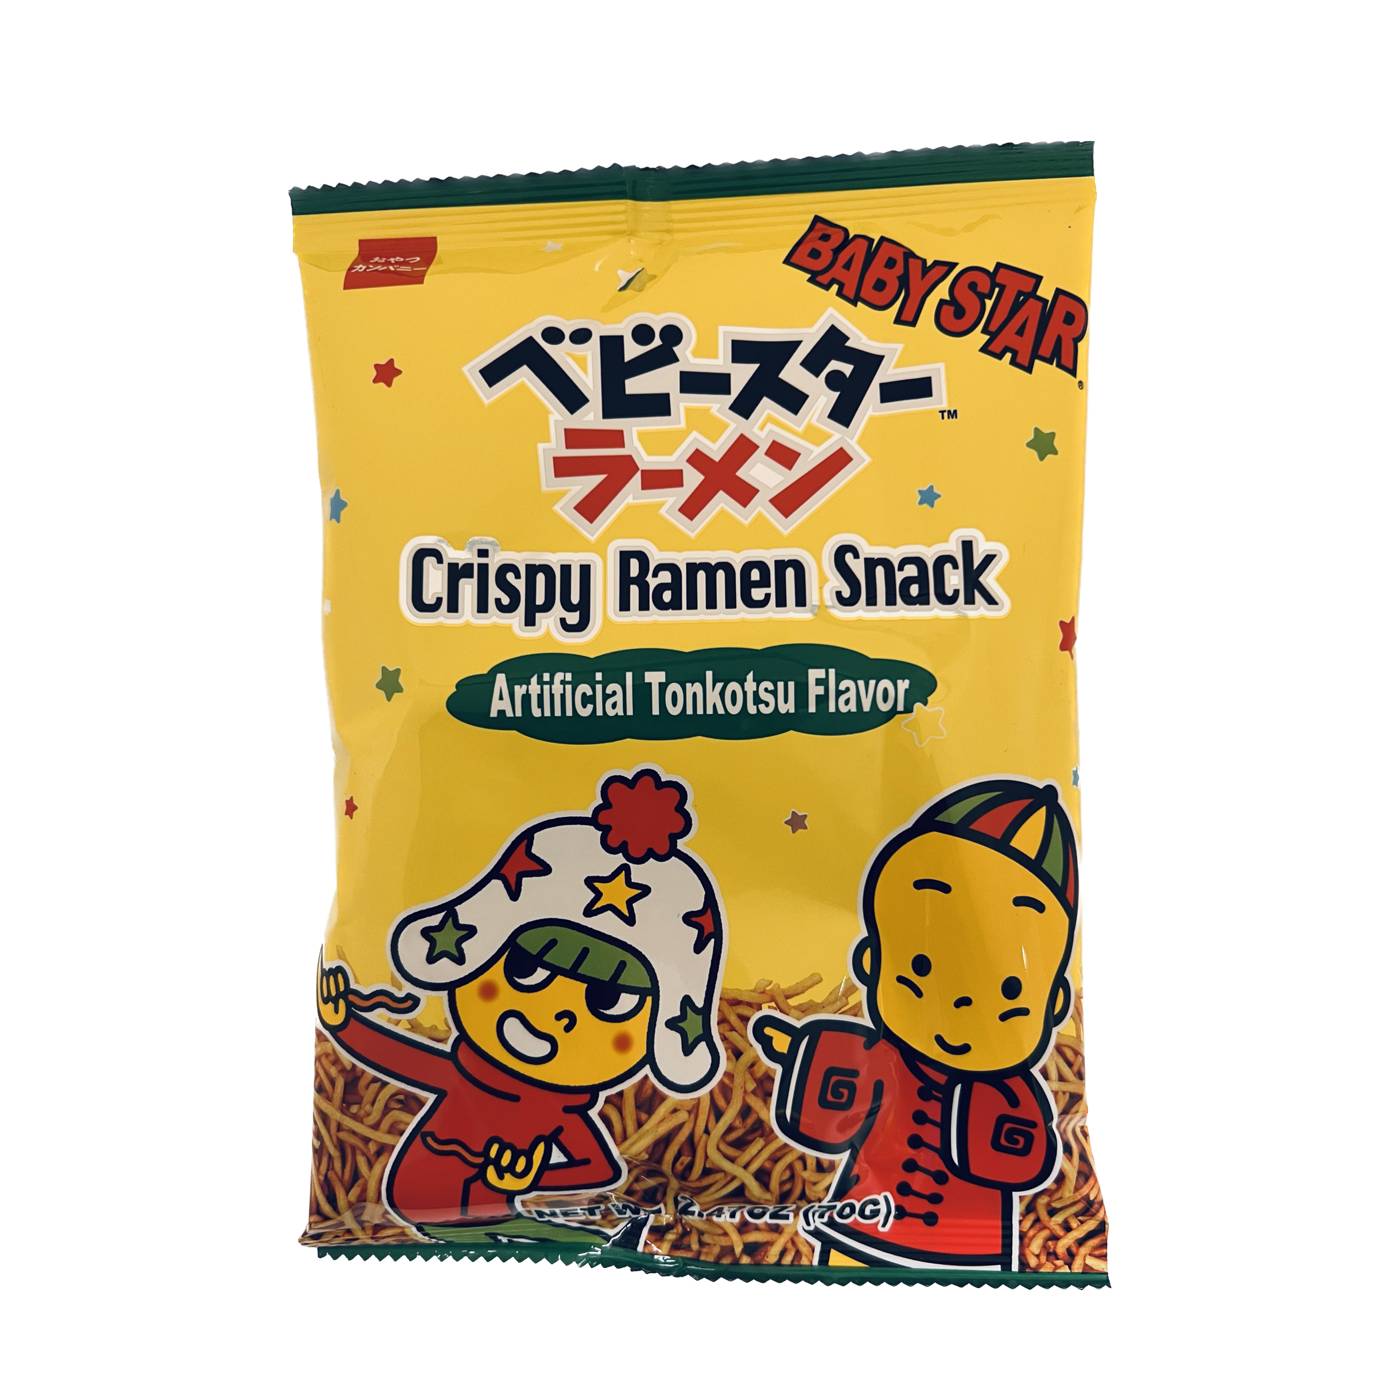 Baby Star Crispy Ramen Snack Tonkotsu; image 1 of 2